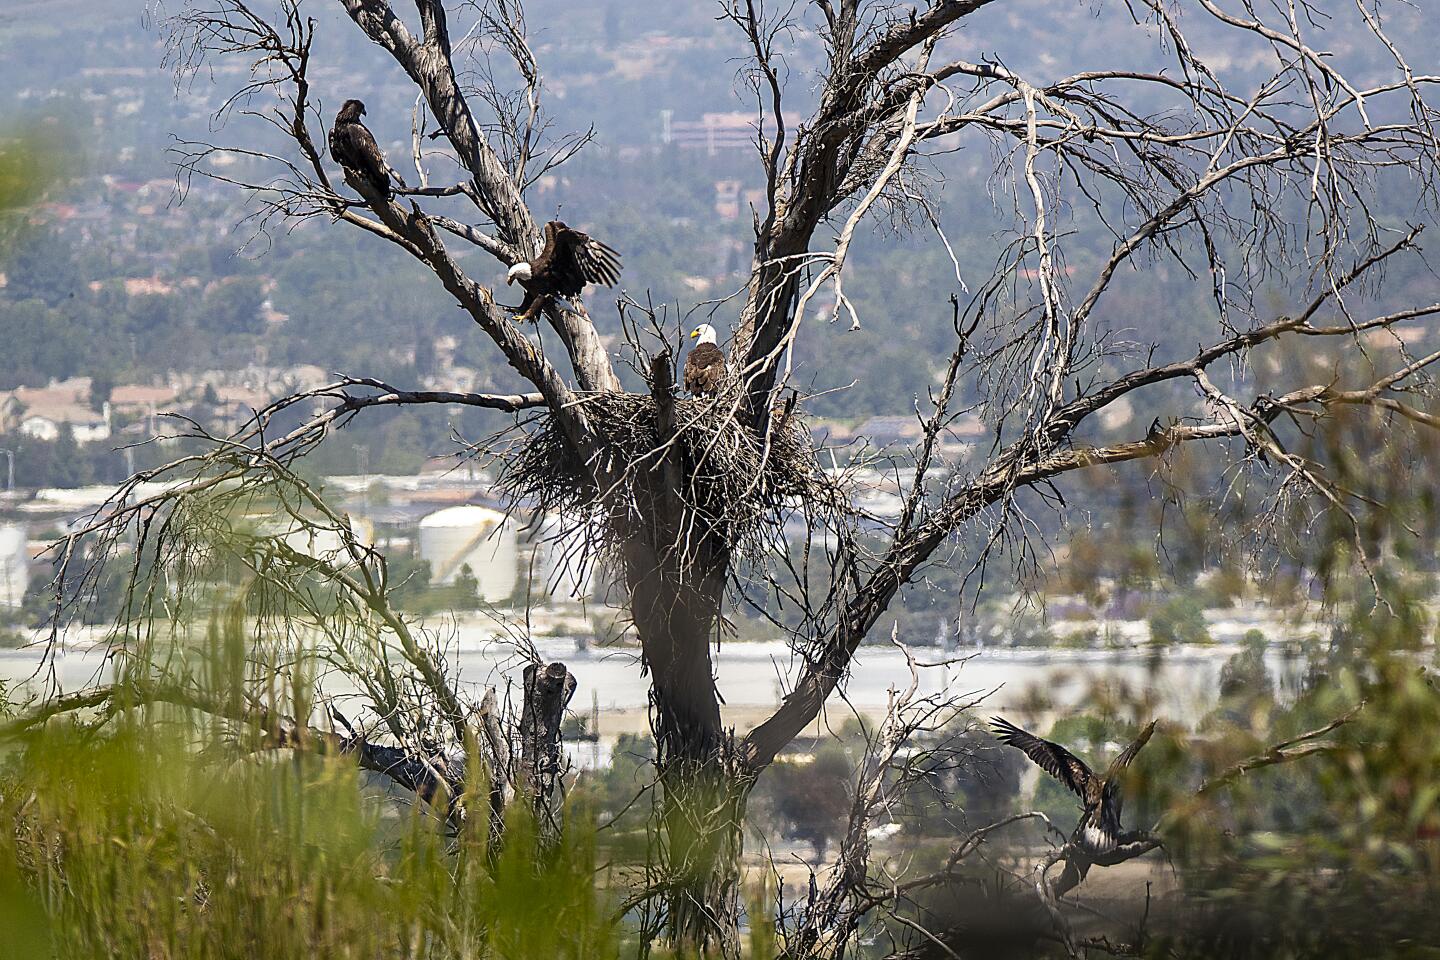 Bald eagles return to nest in Orange County neighborhood